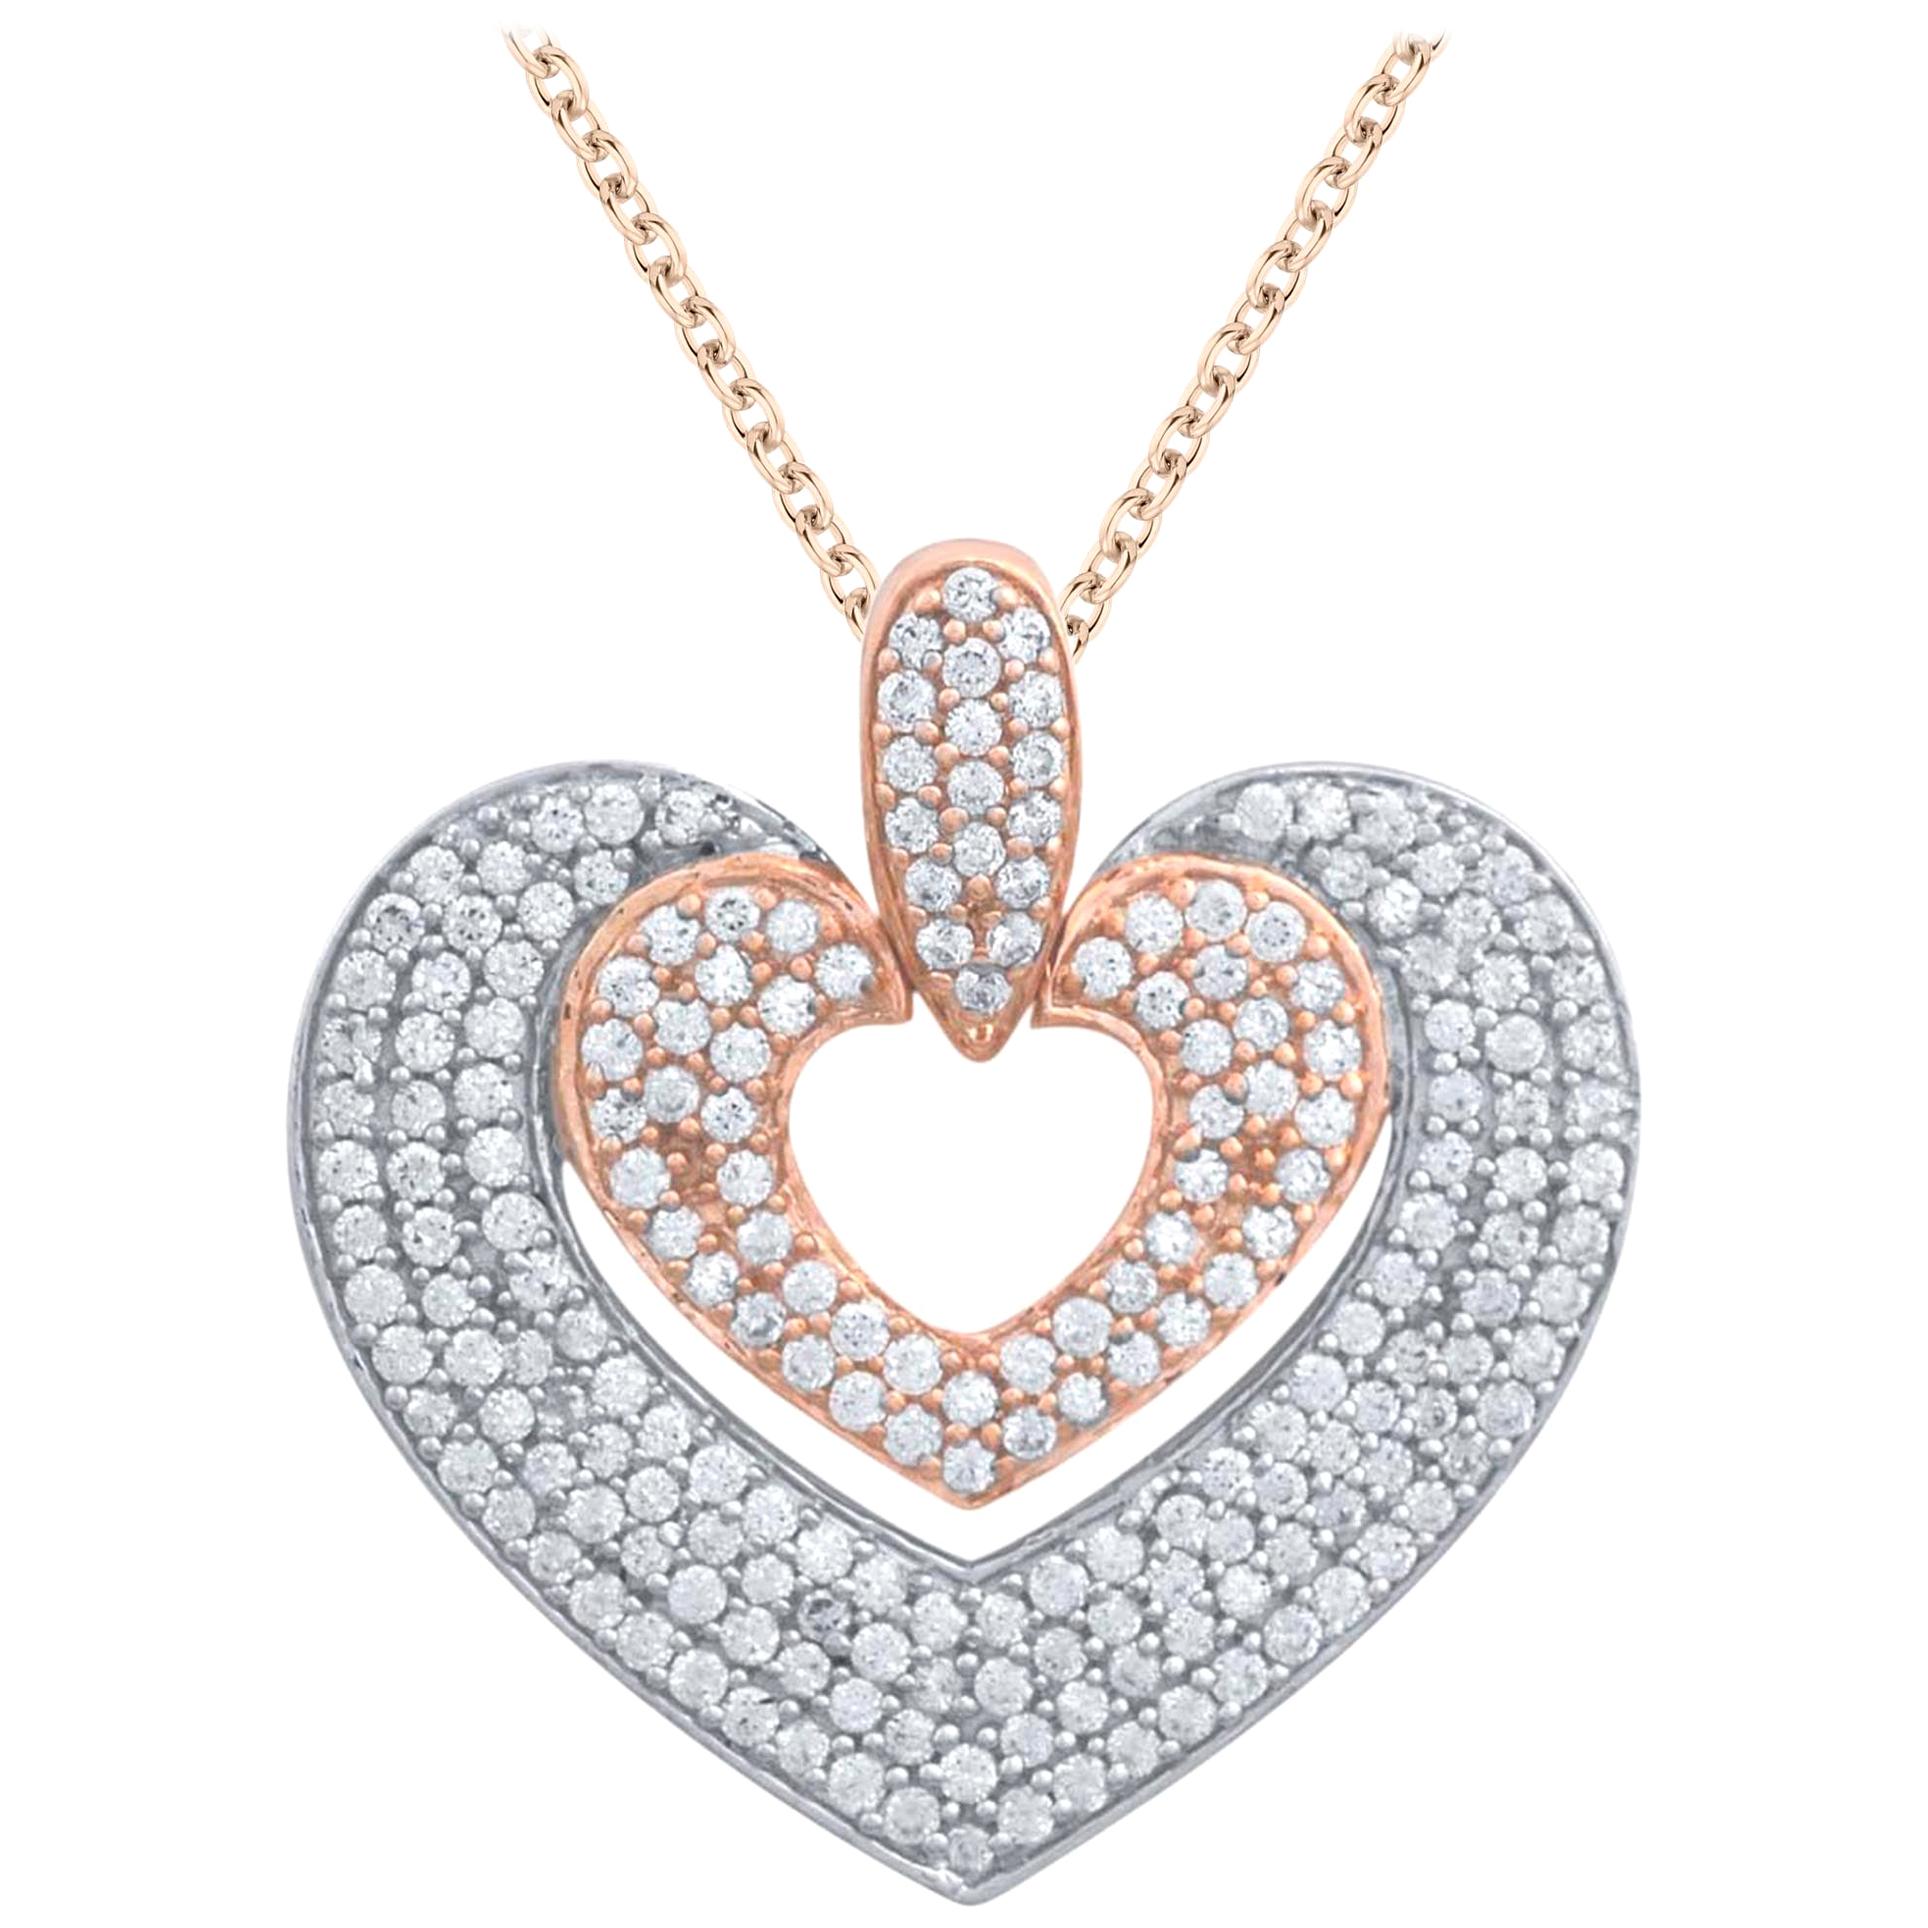 TJD 1.00Carat Diamond 14 Karat Rose Gold Double Heart Pendant with 18 inch chain